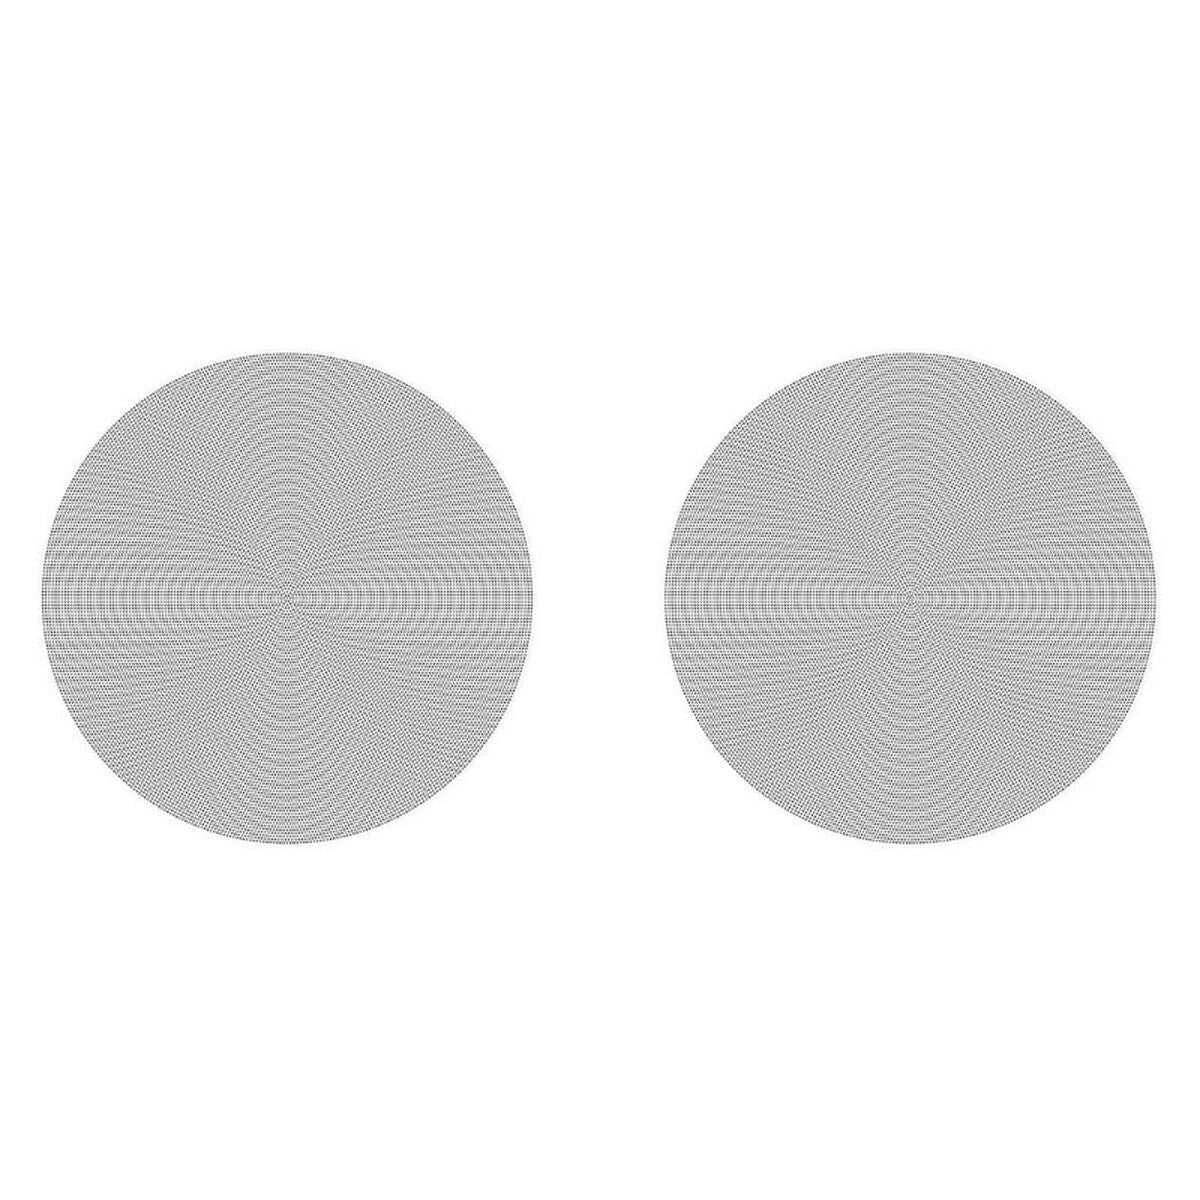 Speaker grille Sonos Grille 6 White